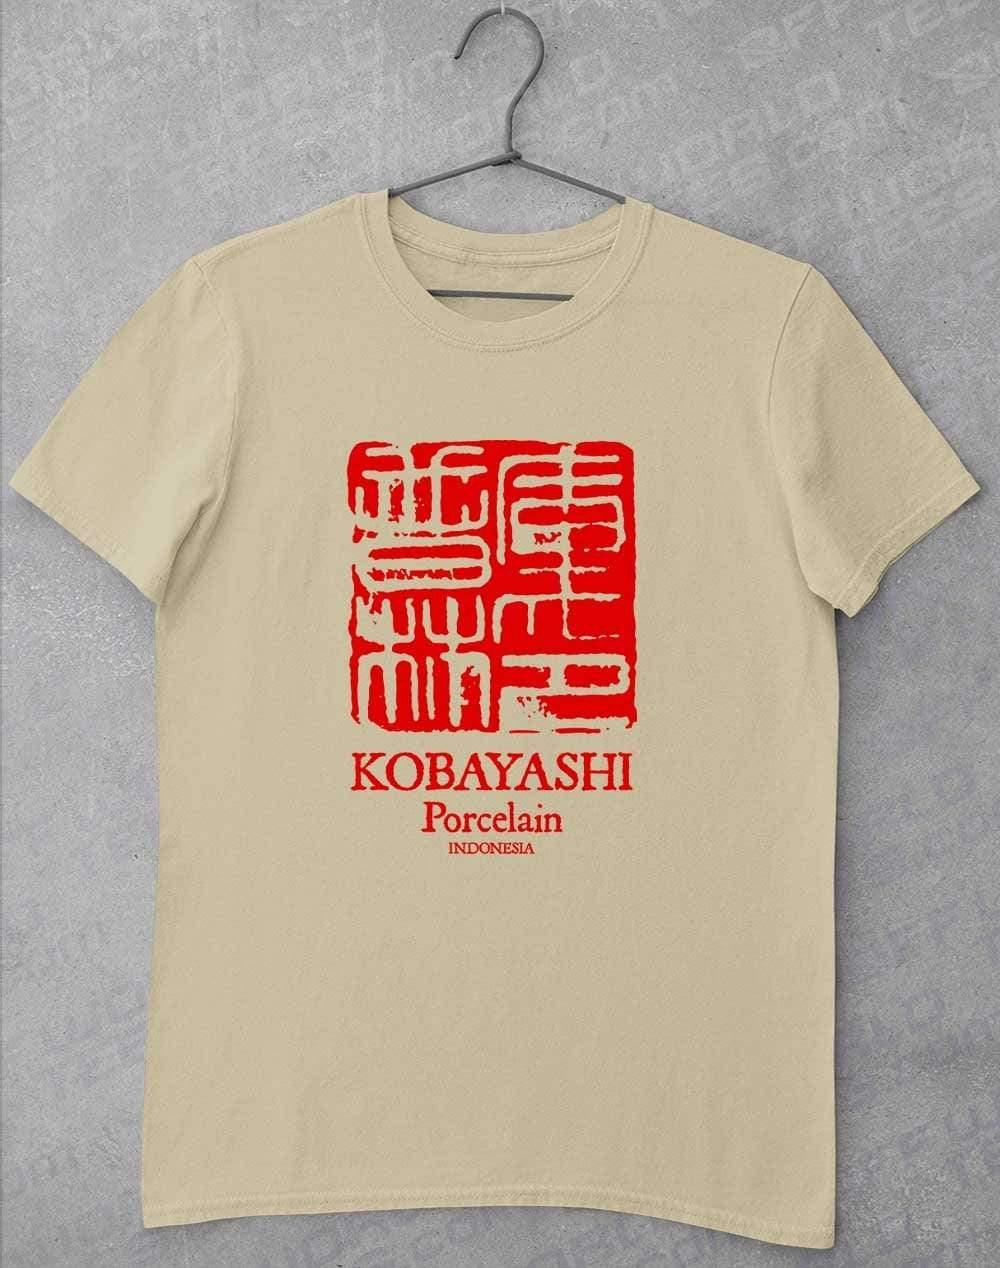 Kobayashi Porcelain T-Shirt S / Sand  - Off World Tees